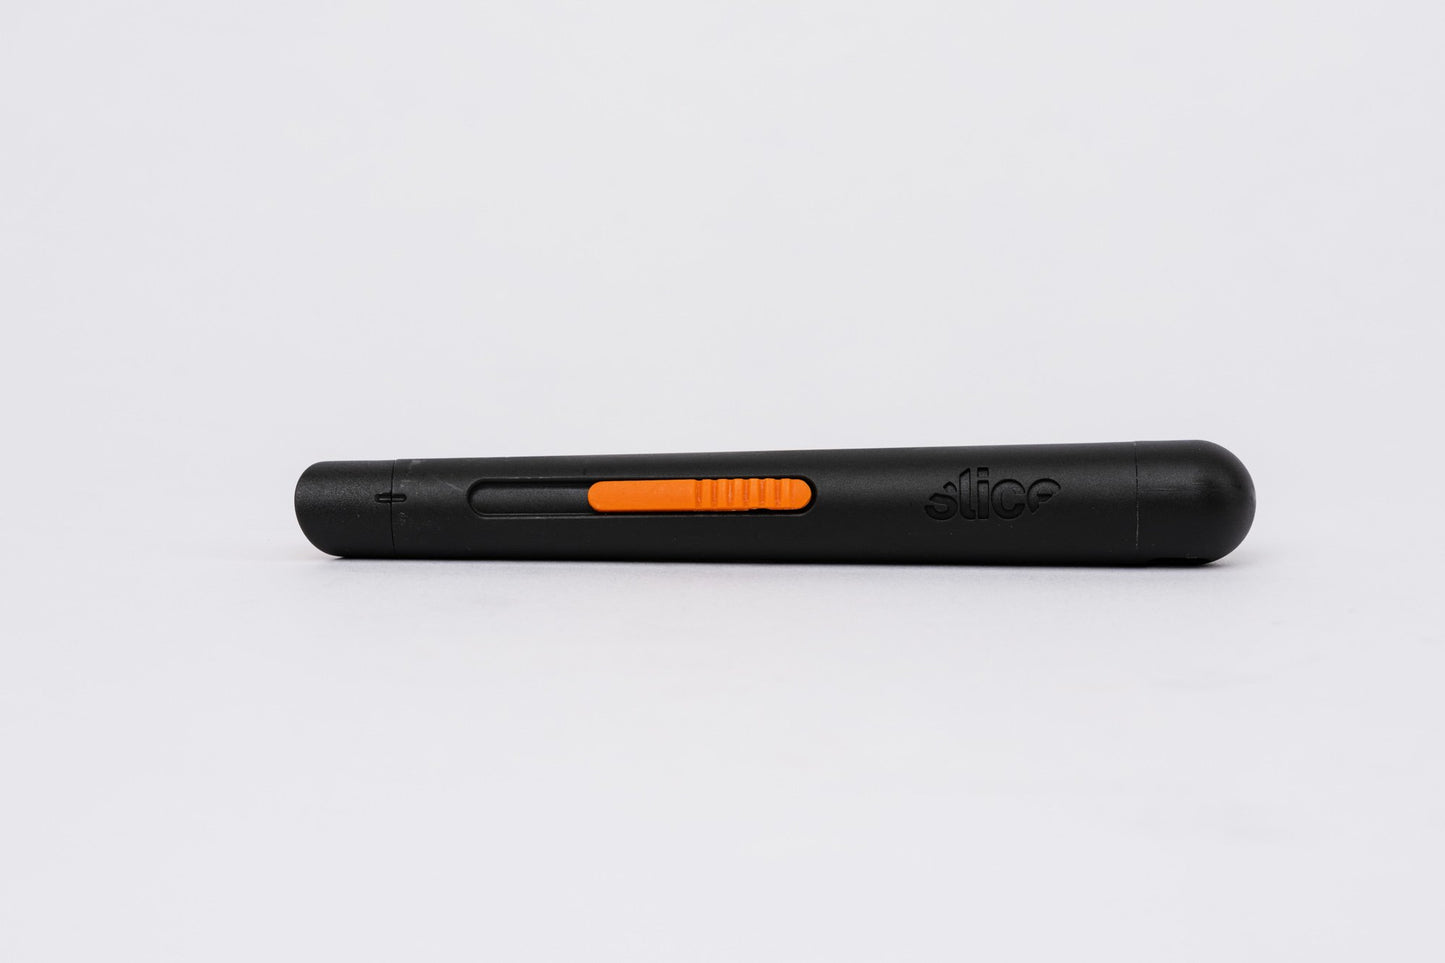 Manual Pen Cutter